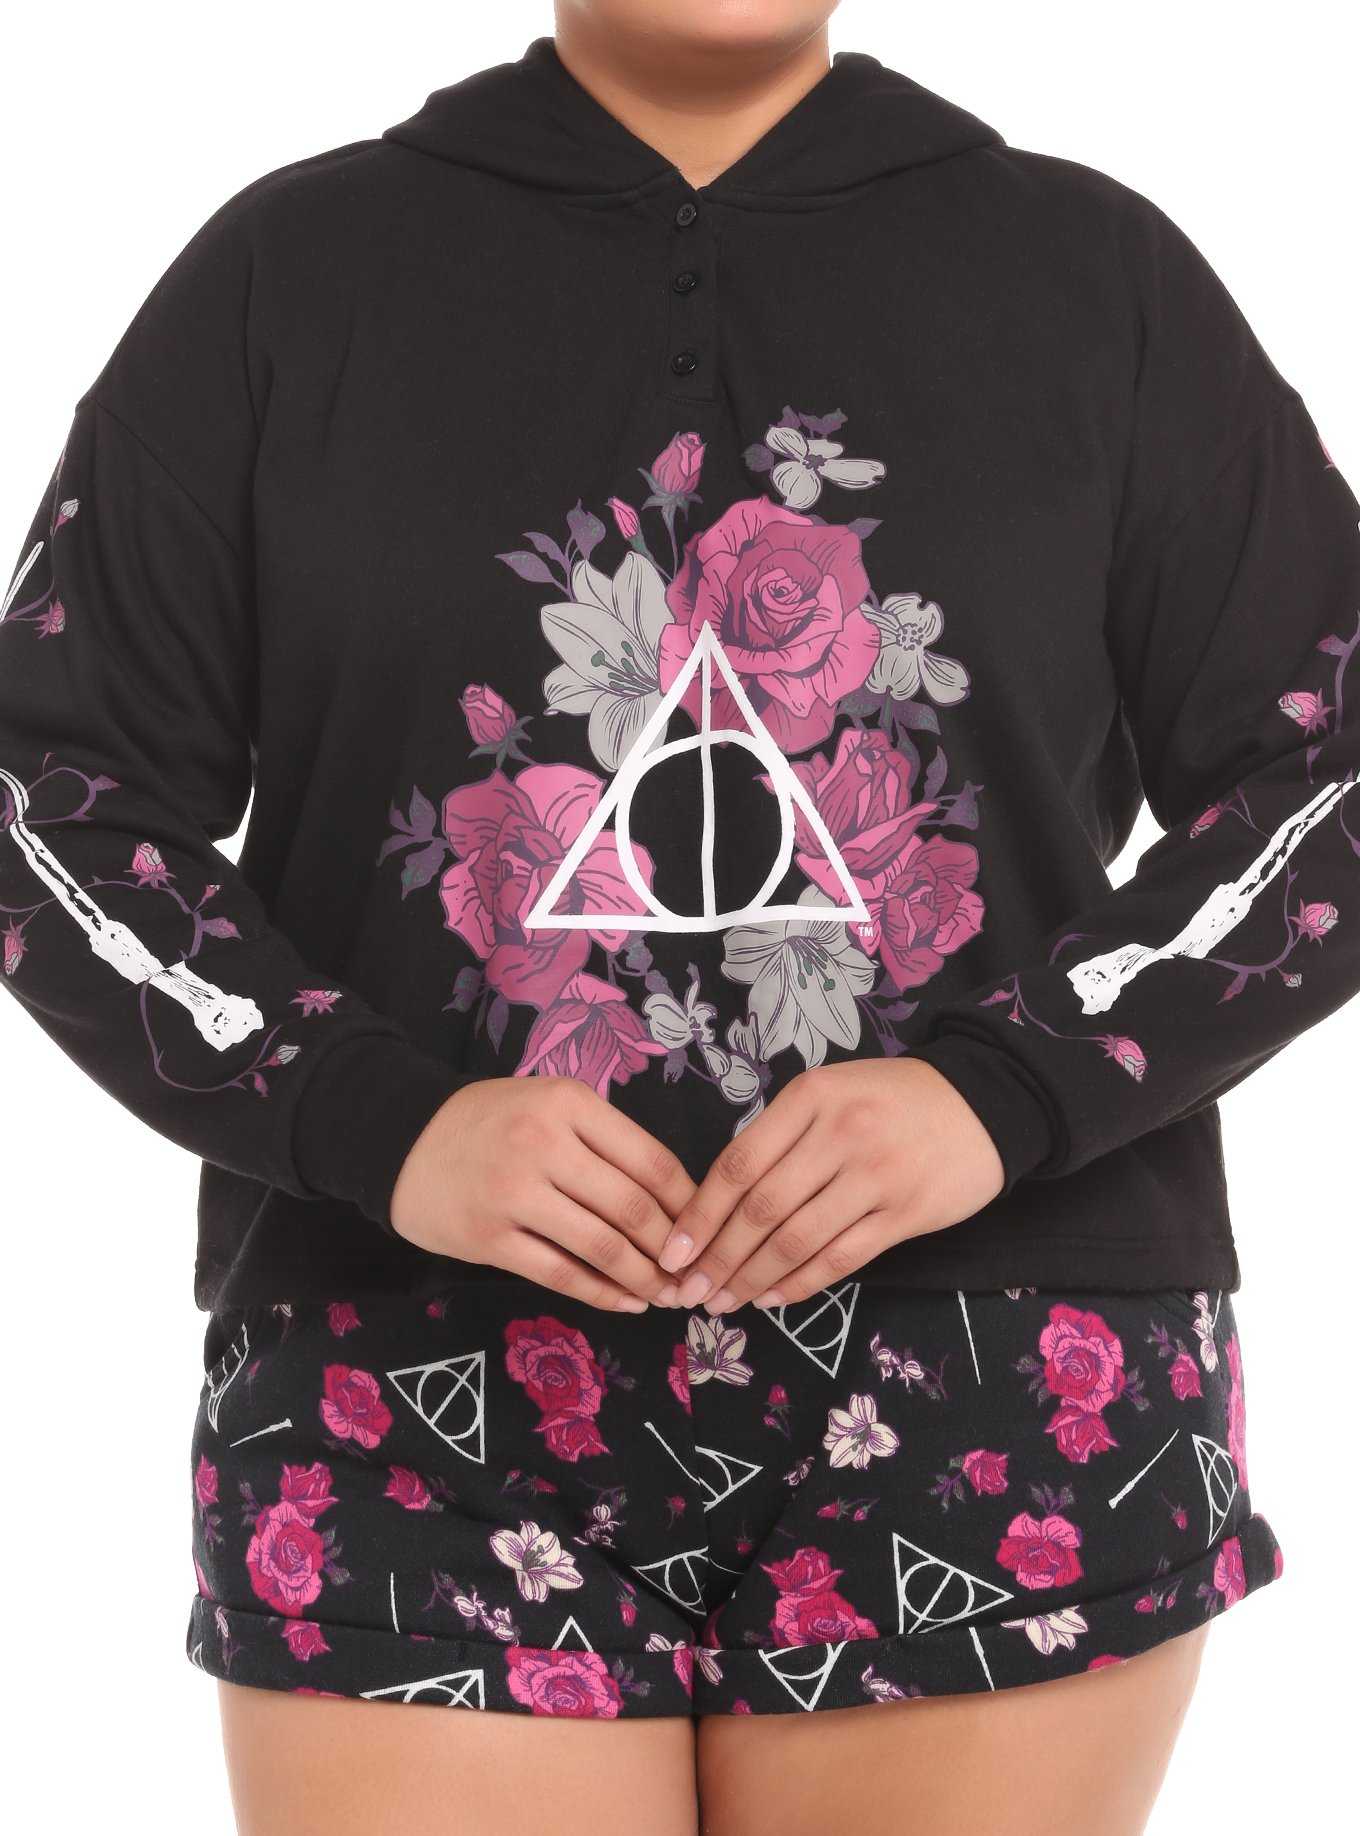 Harry Potter Deathly Hallows Floral Crop Hoodie Plus Size, , hi-res